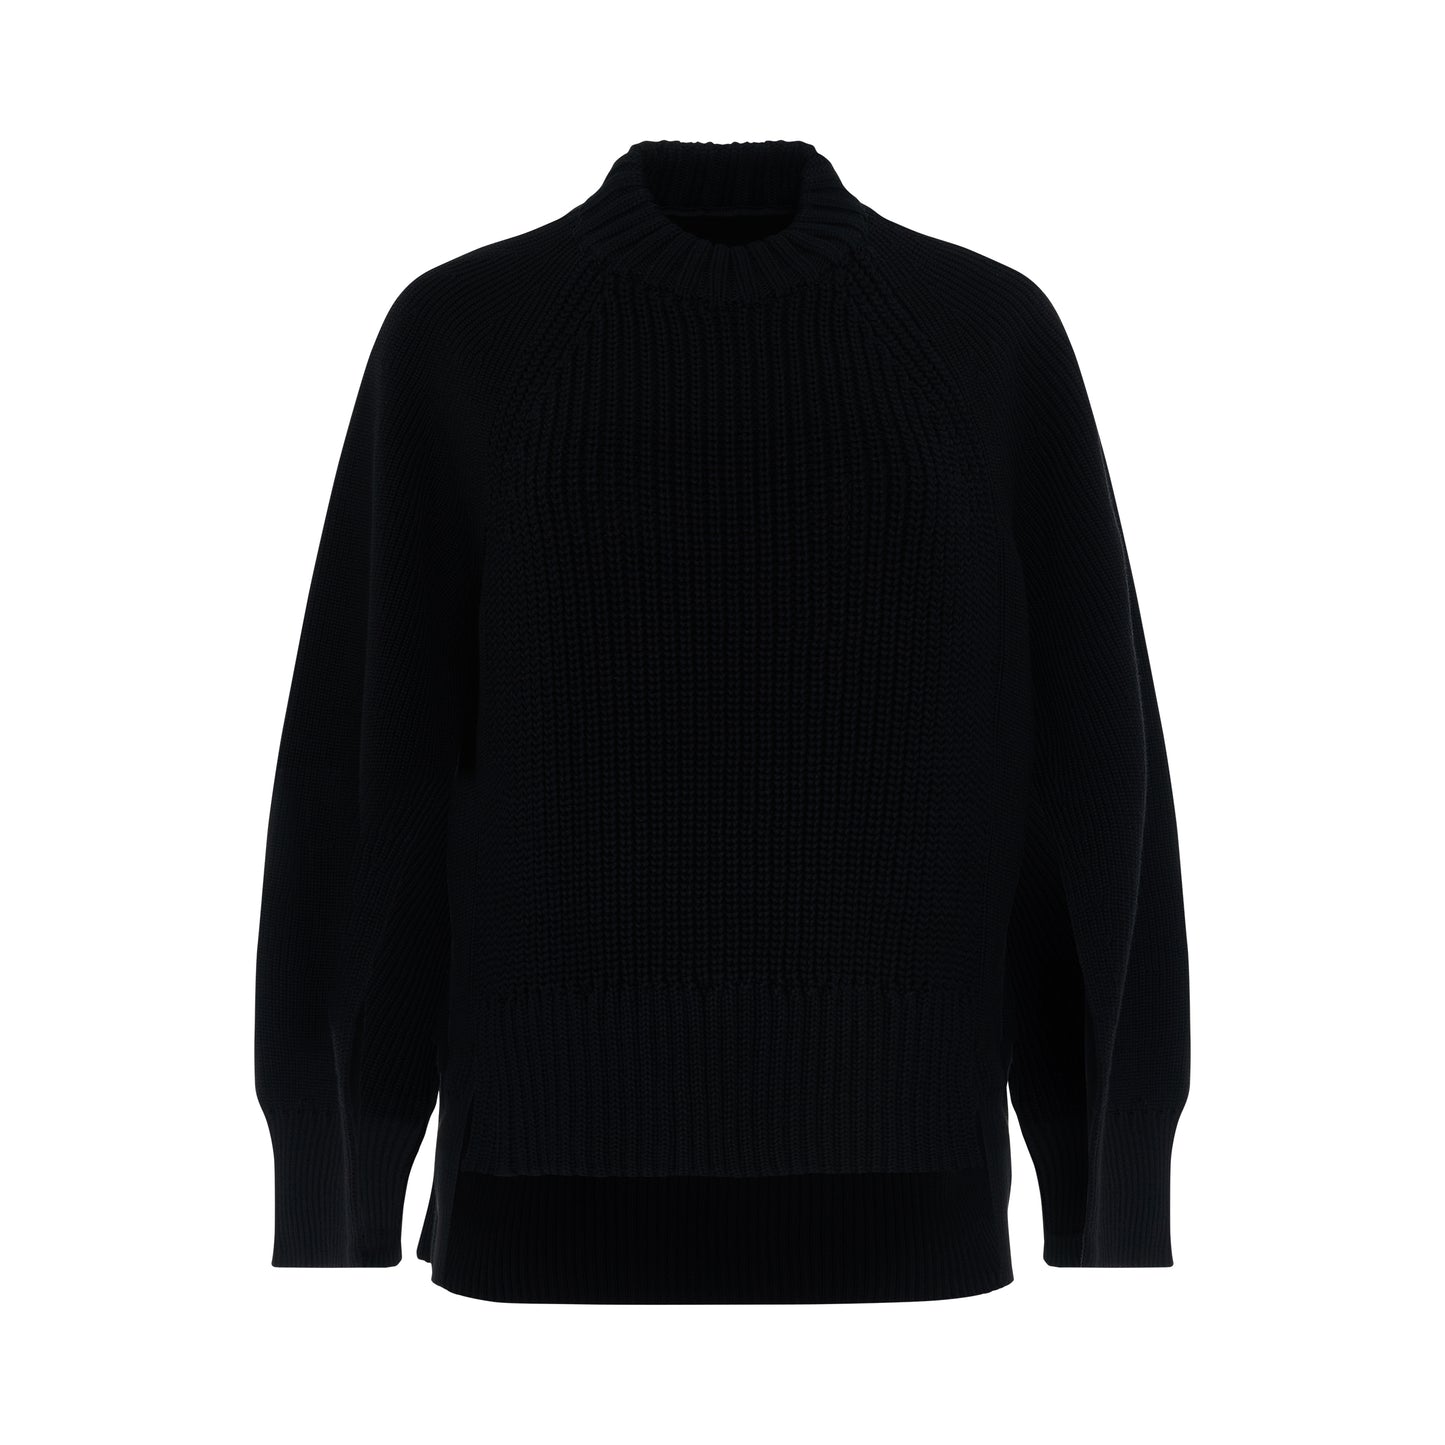 Knit Pullover in Black